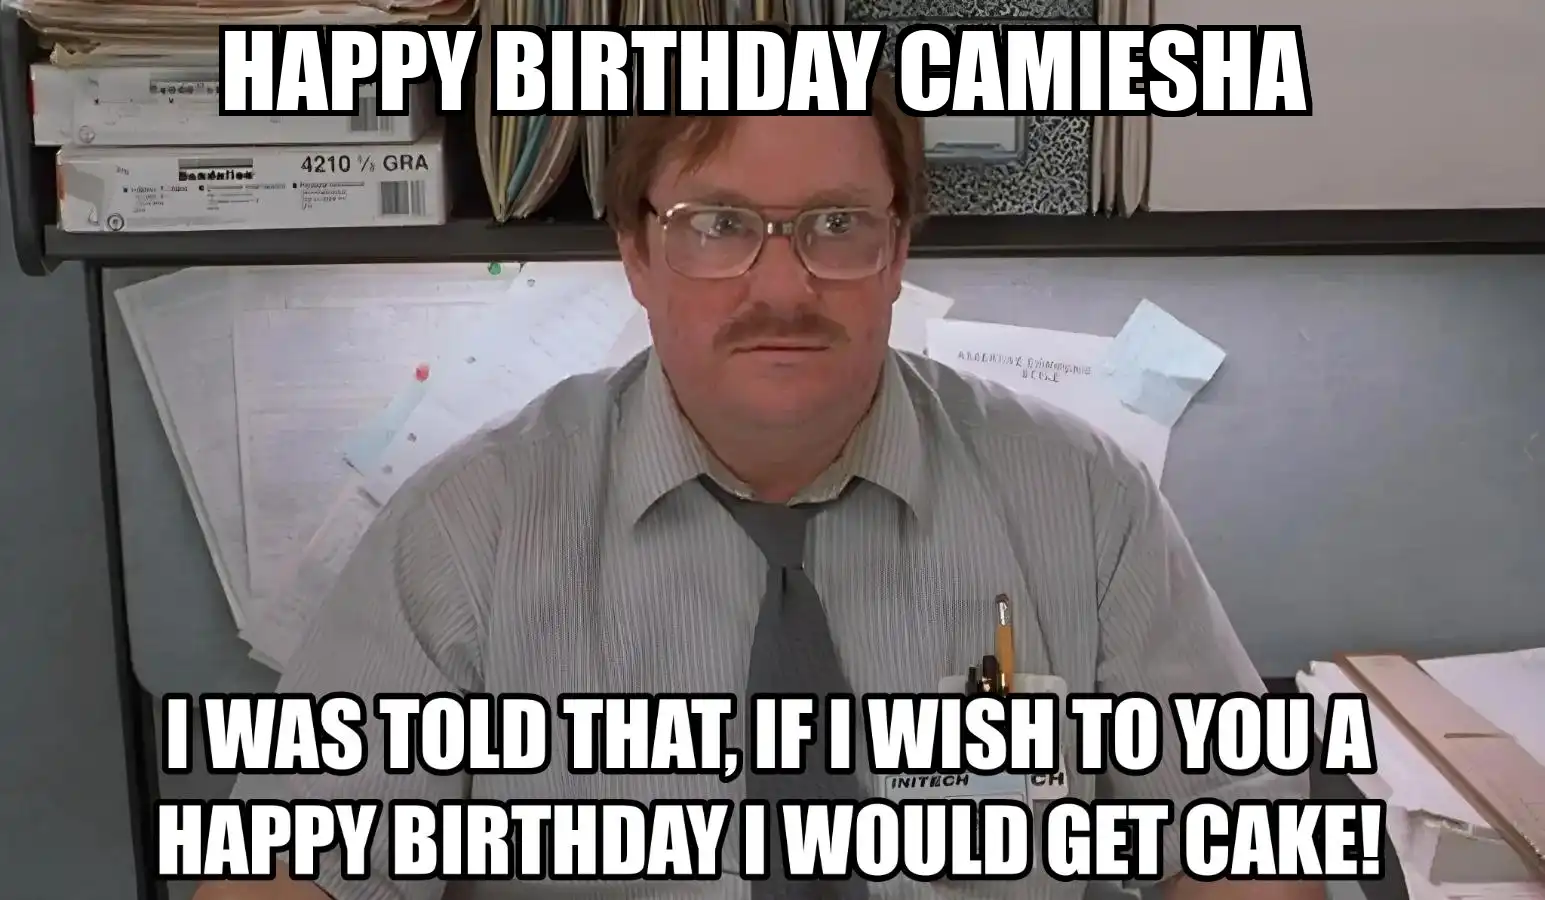 Happy Birthday Camiesha I Would Get A Cake Meme